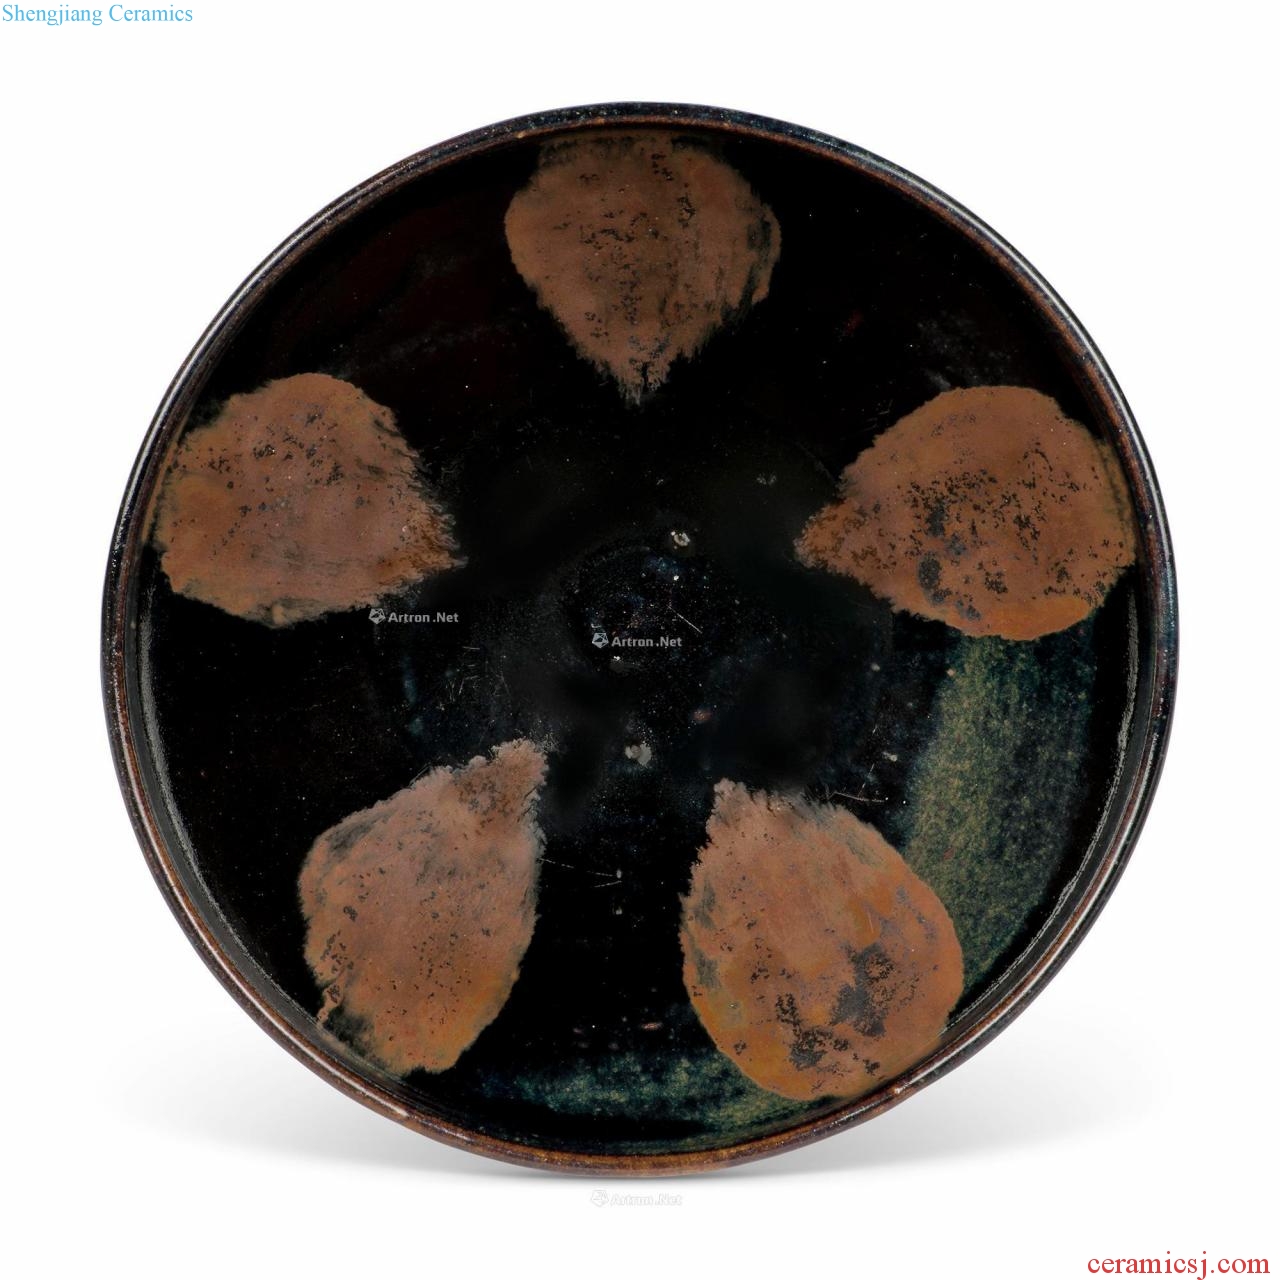 Northern song dynasty Henan black glaze blotches bowl